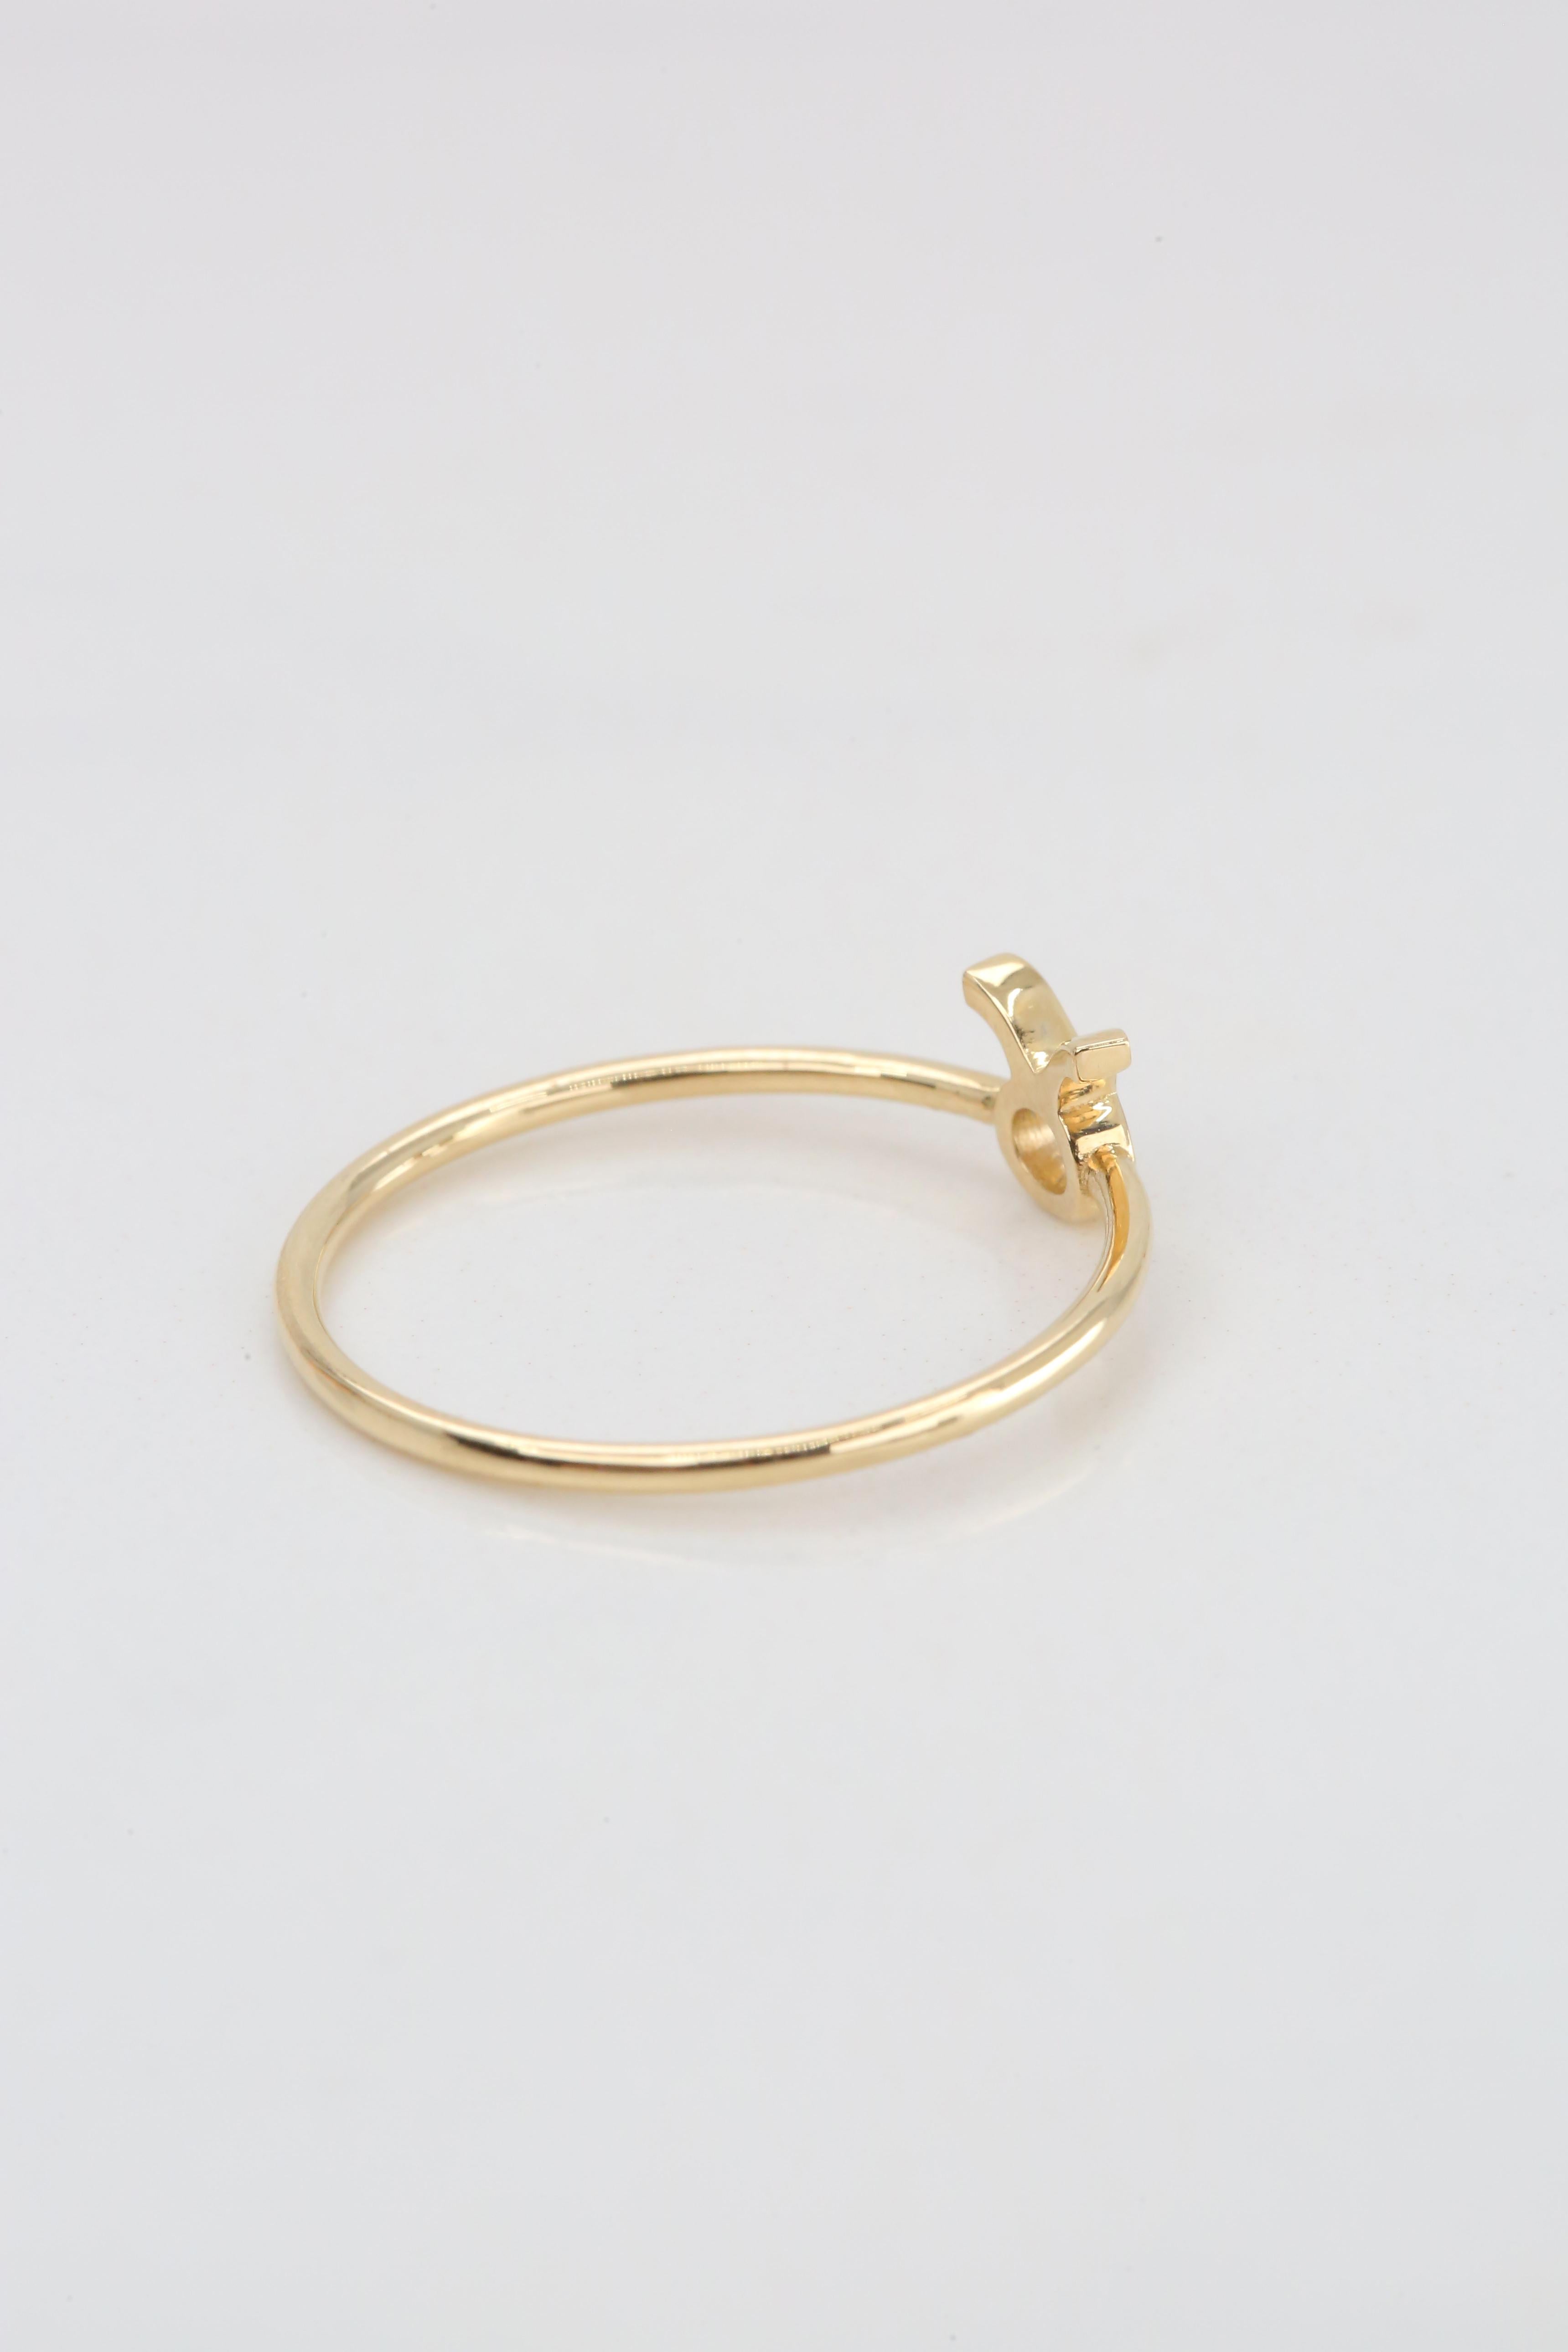 For Sale:  14K Gold Taurus Zodiac Ring, Taurus Sign Zodiac Ring 7